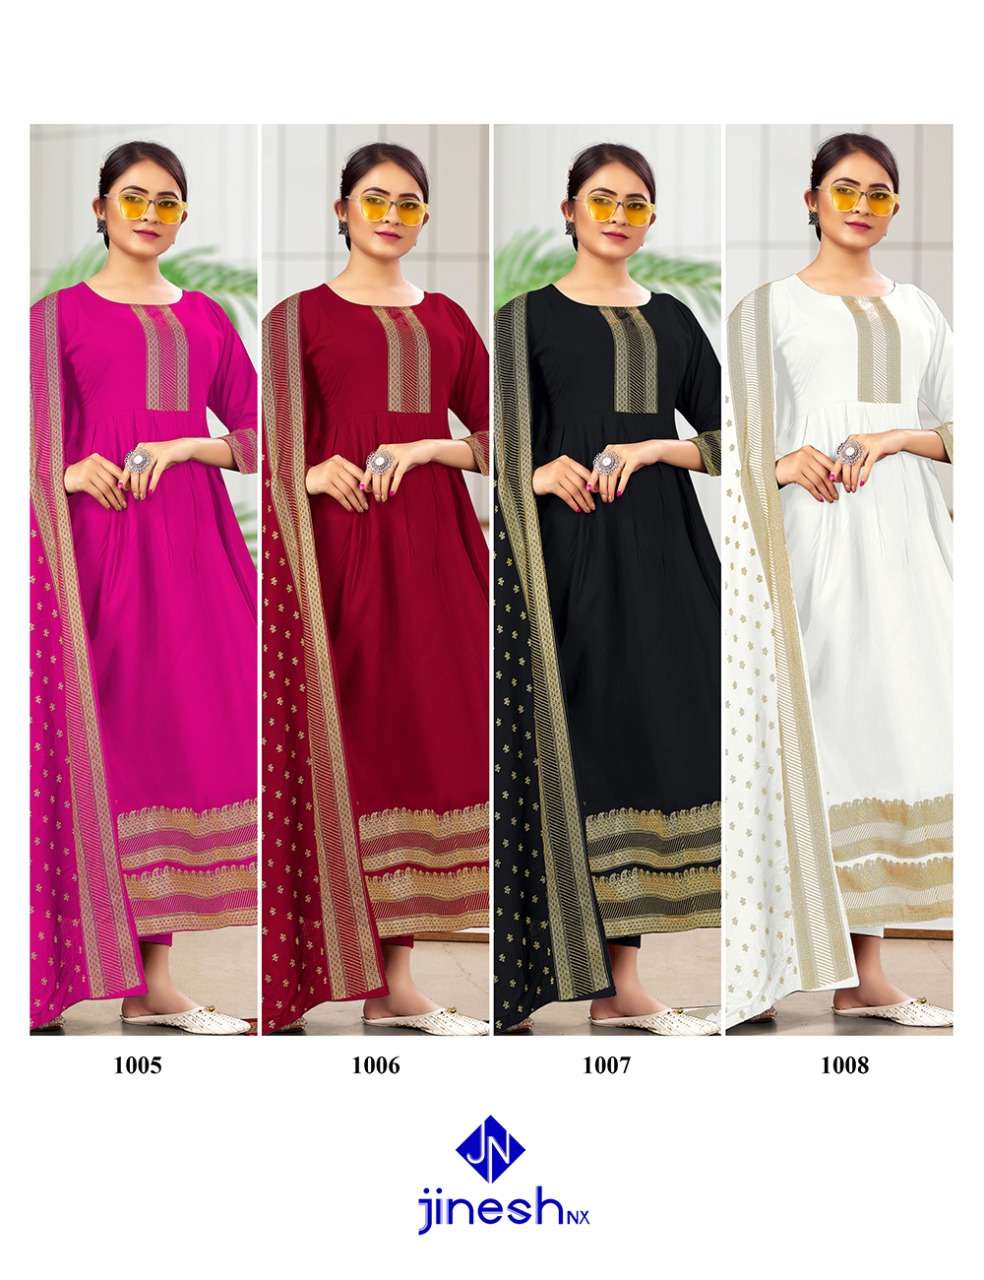 jinesh nx monika rayon foil printed kurtis with dupatta set wholesale price supplier surat